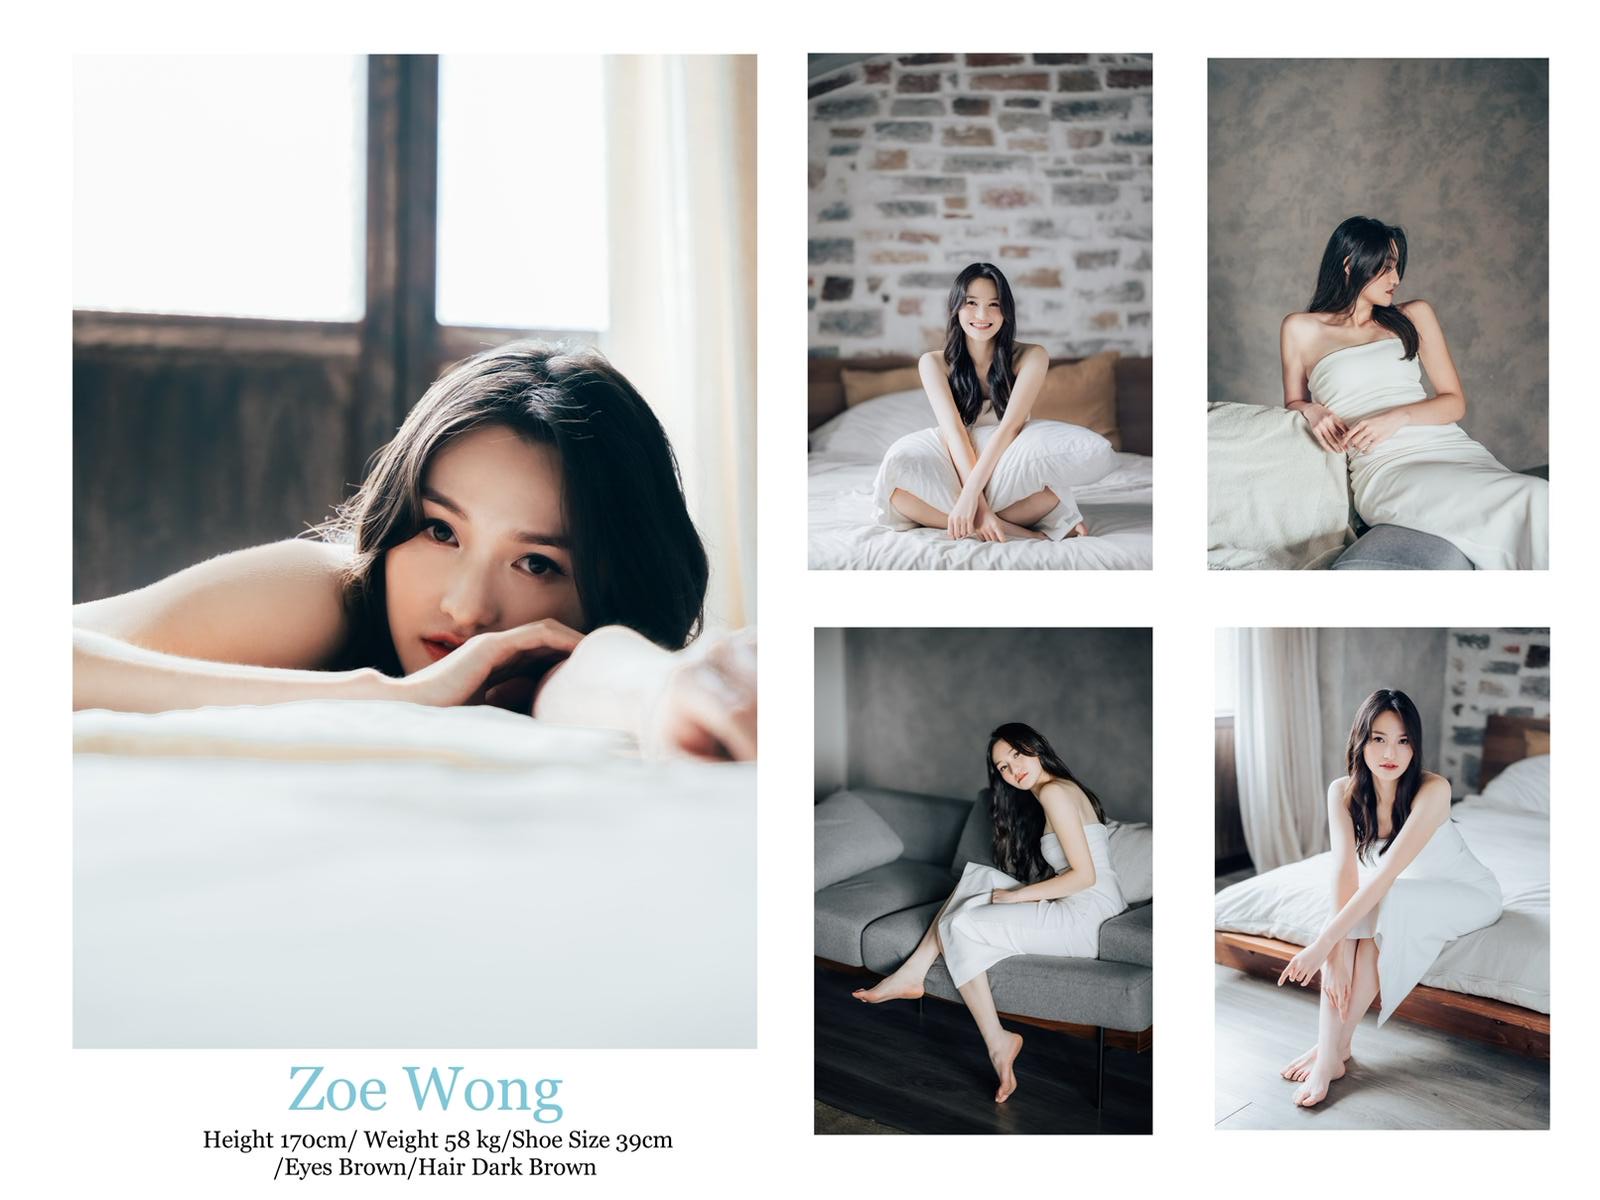 Zoe Wong